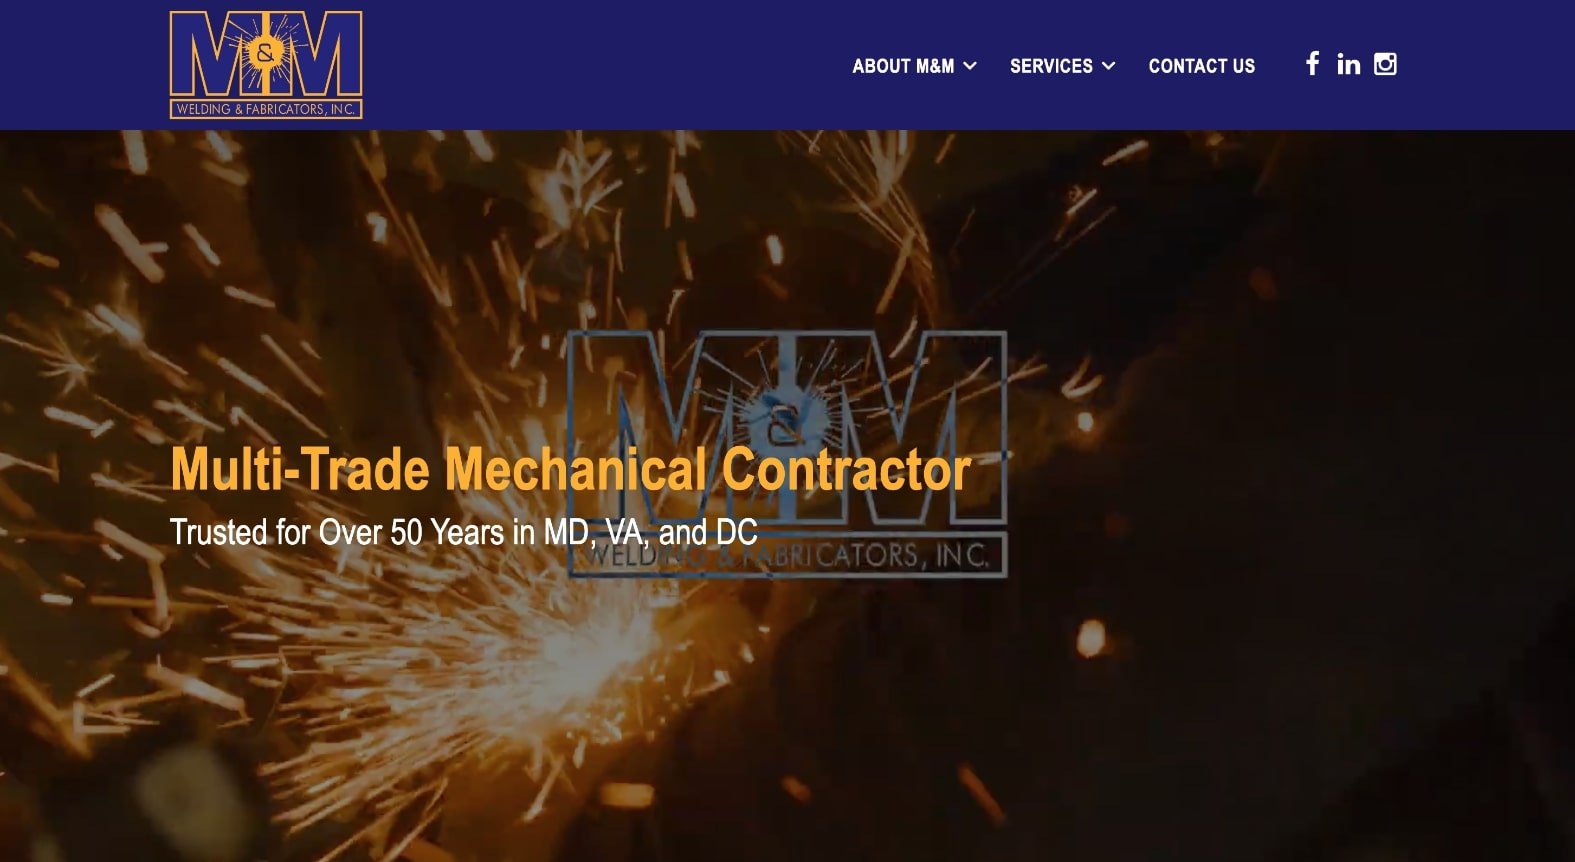 M&M Welding and Fabricators, Inc.